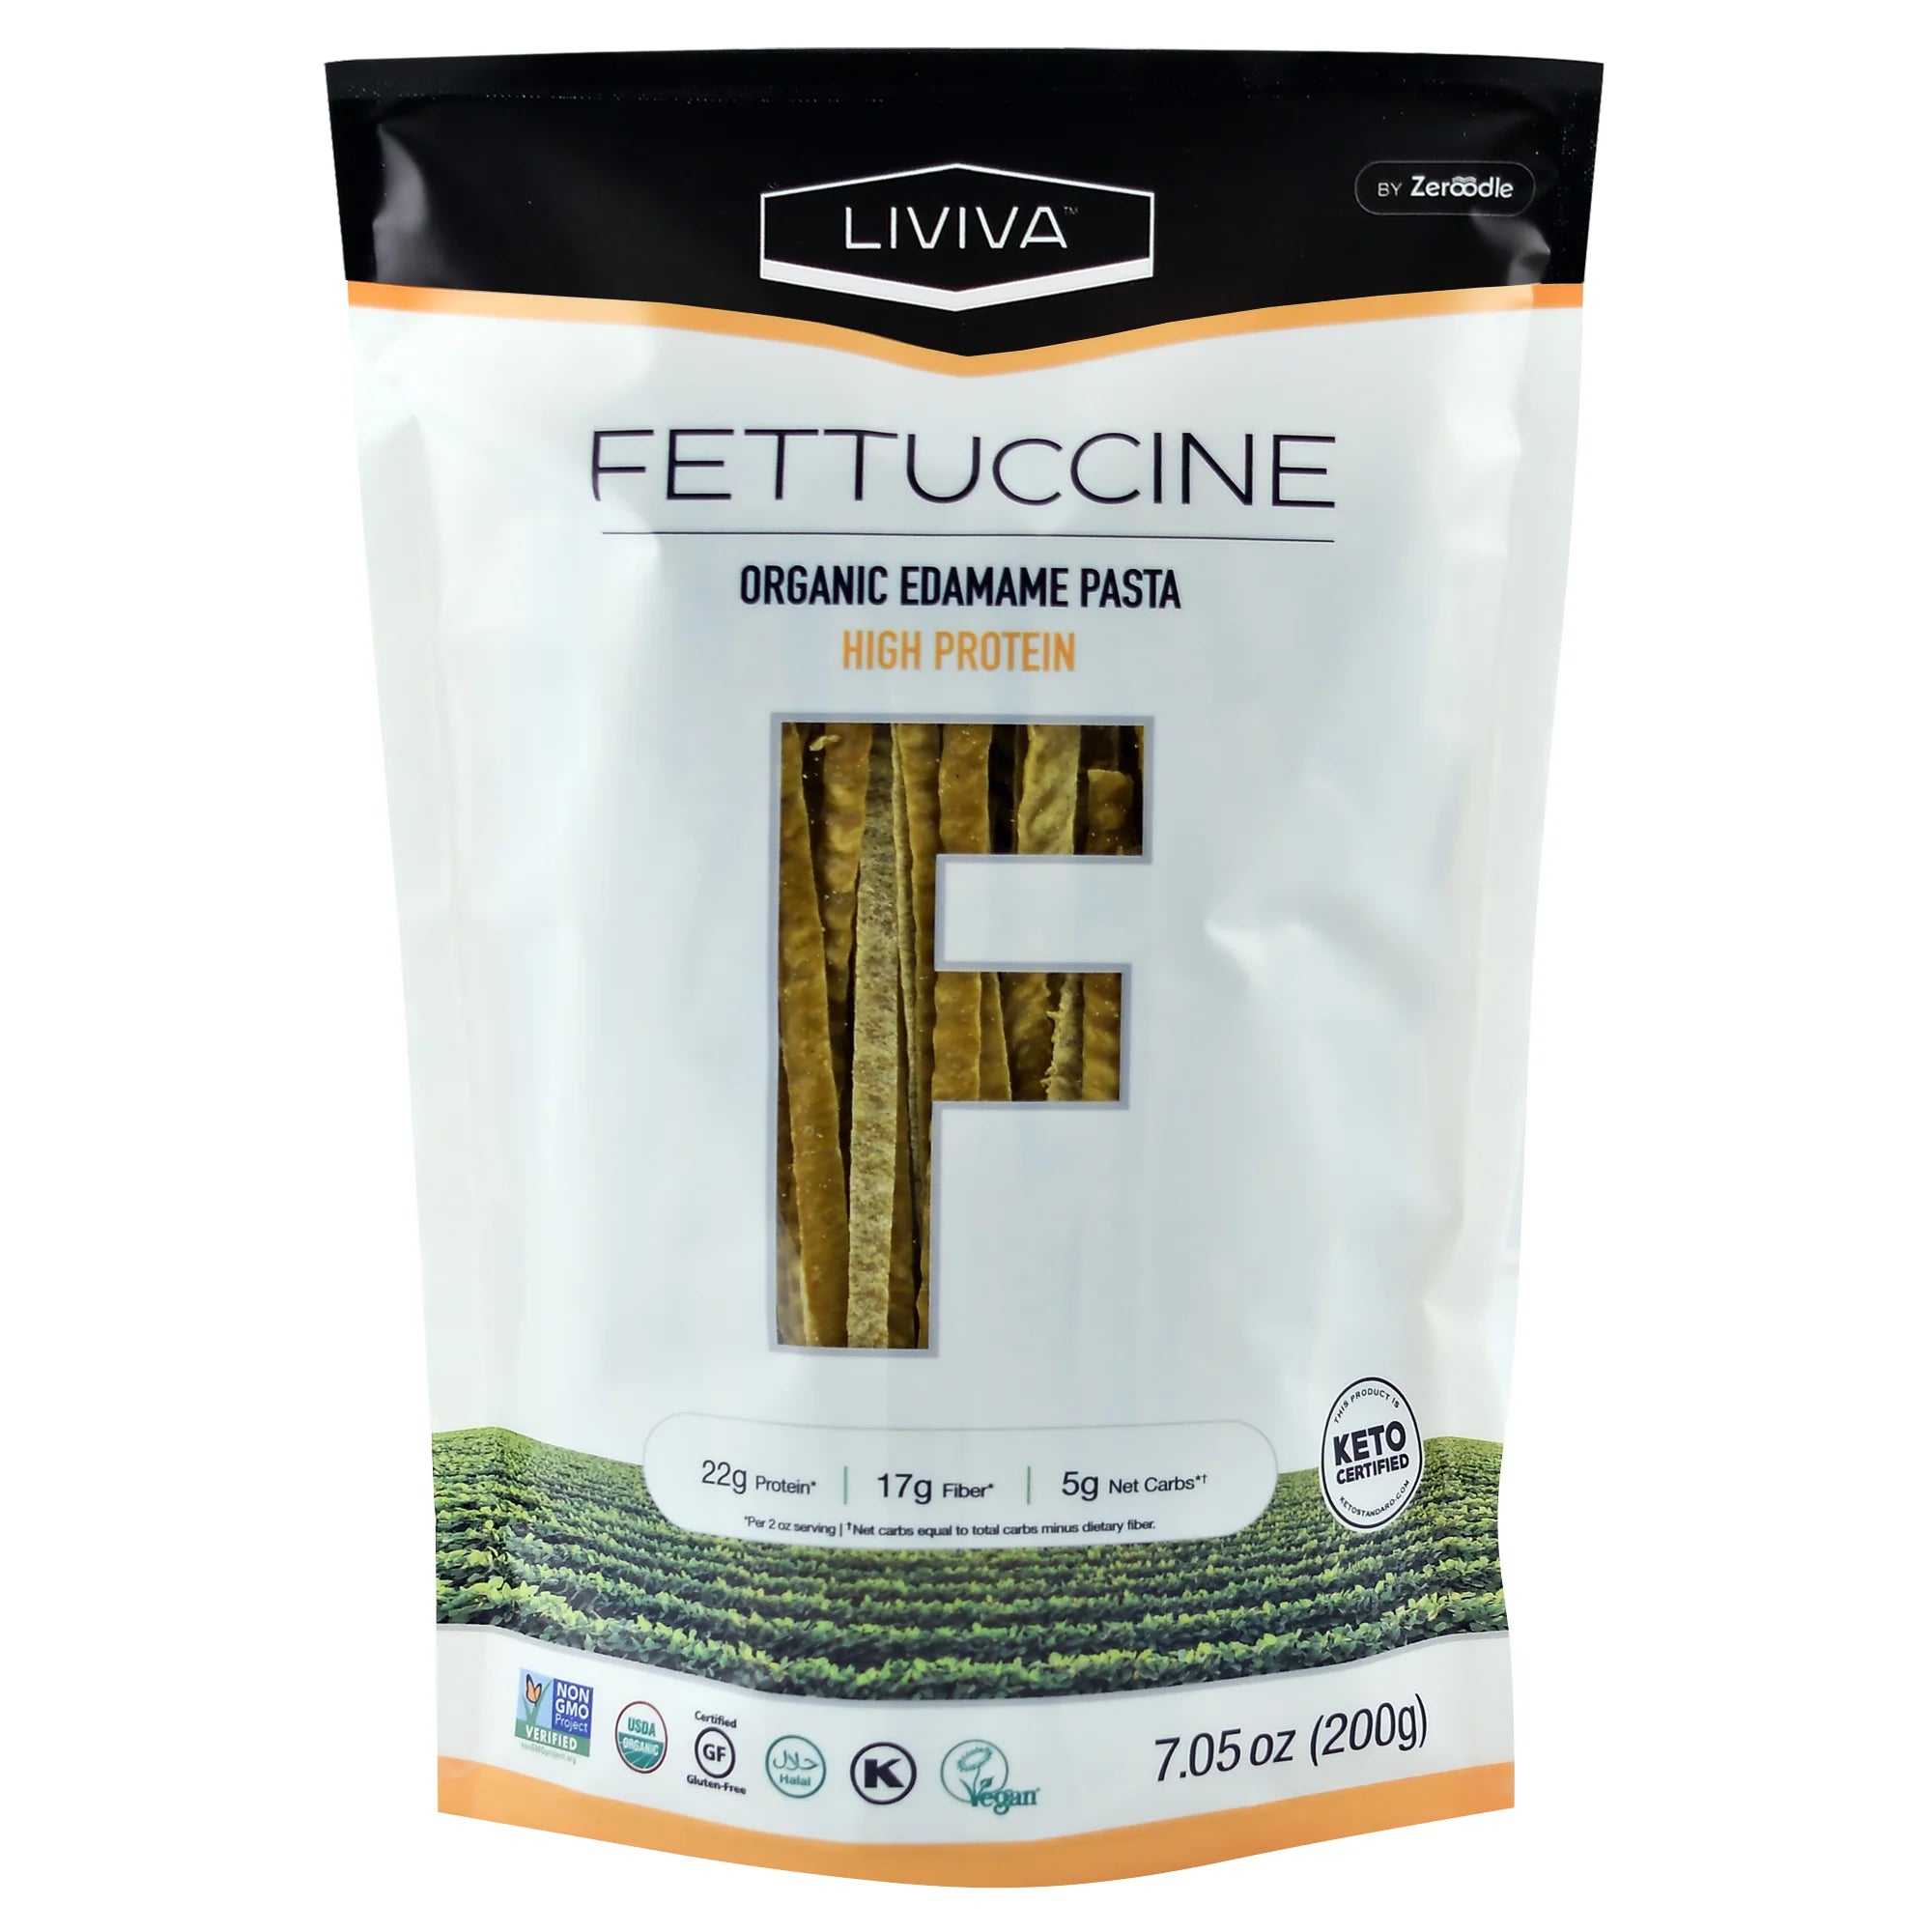 Organic Edamame Fettuccine by Liviva, 200 g